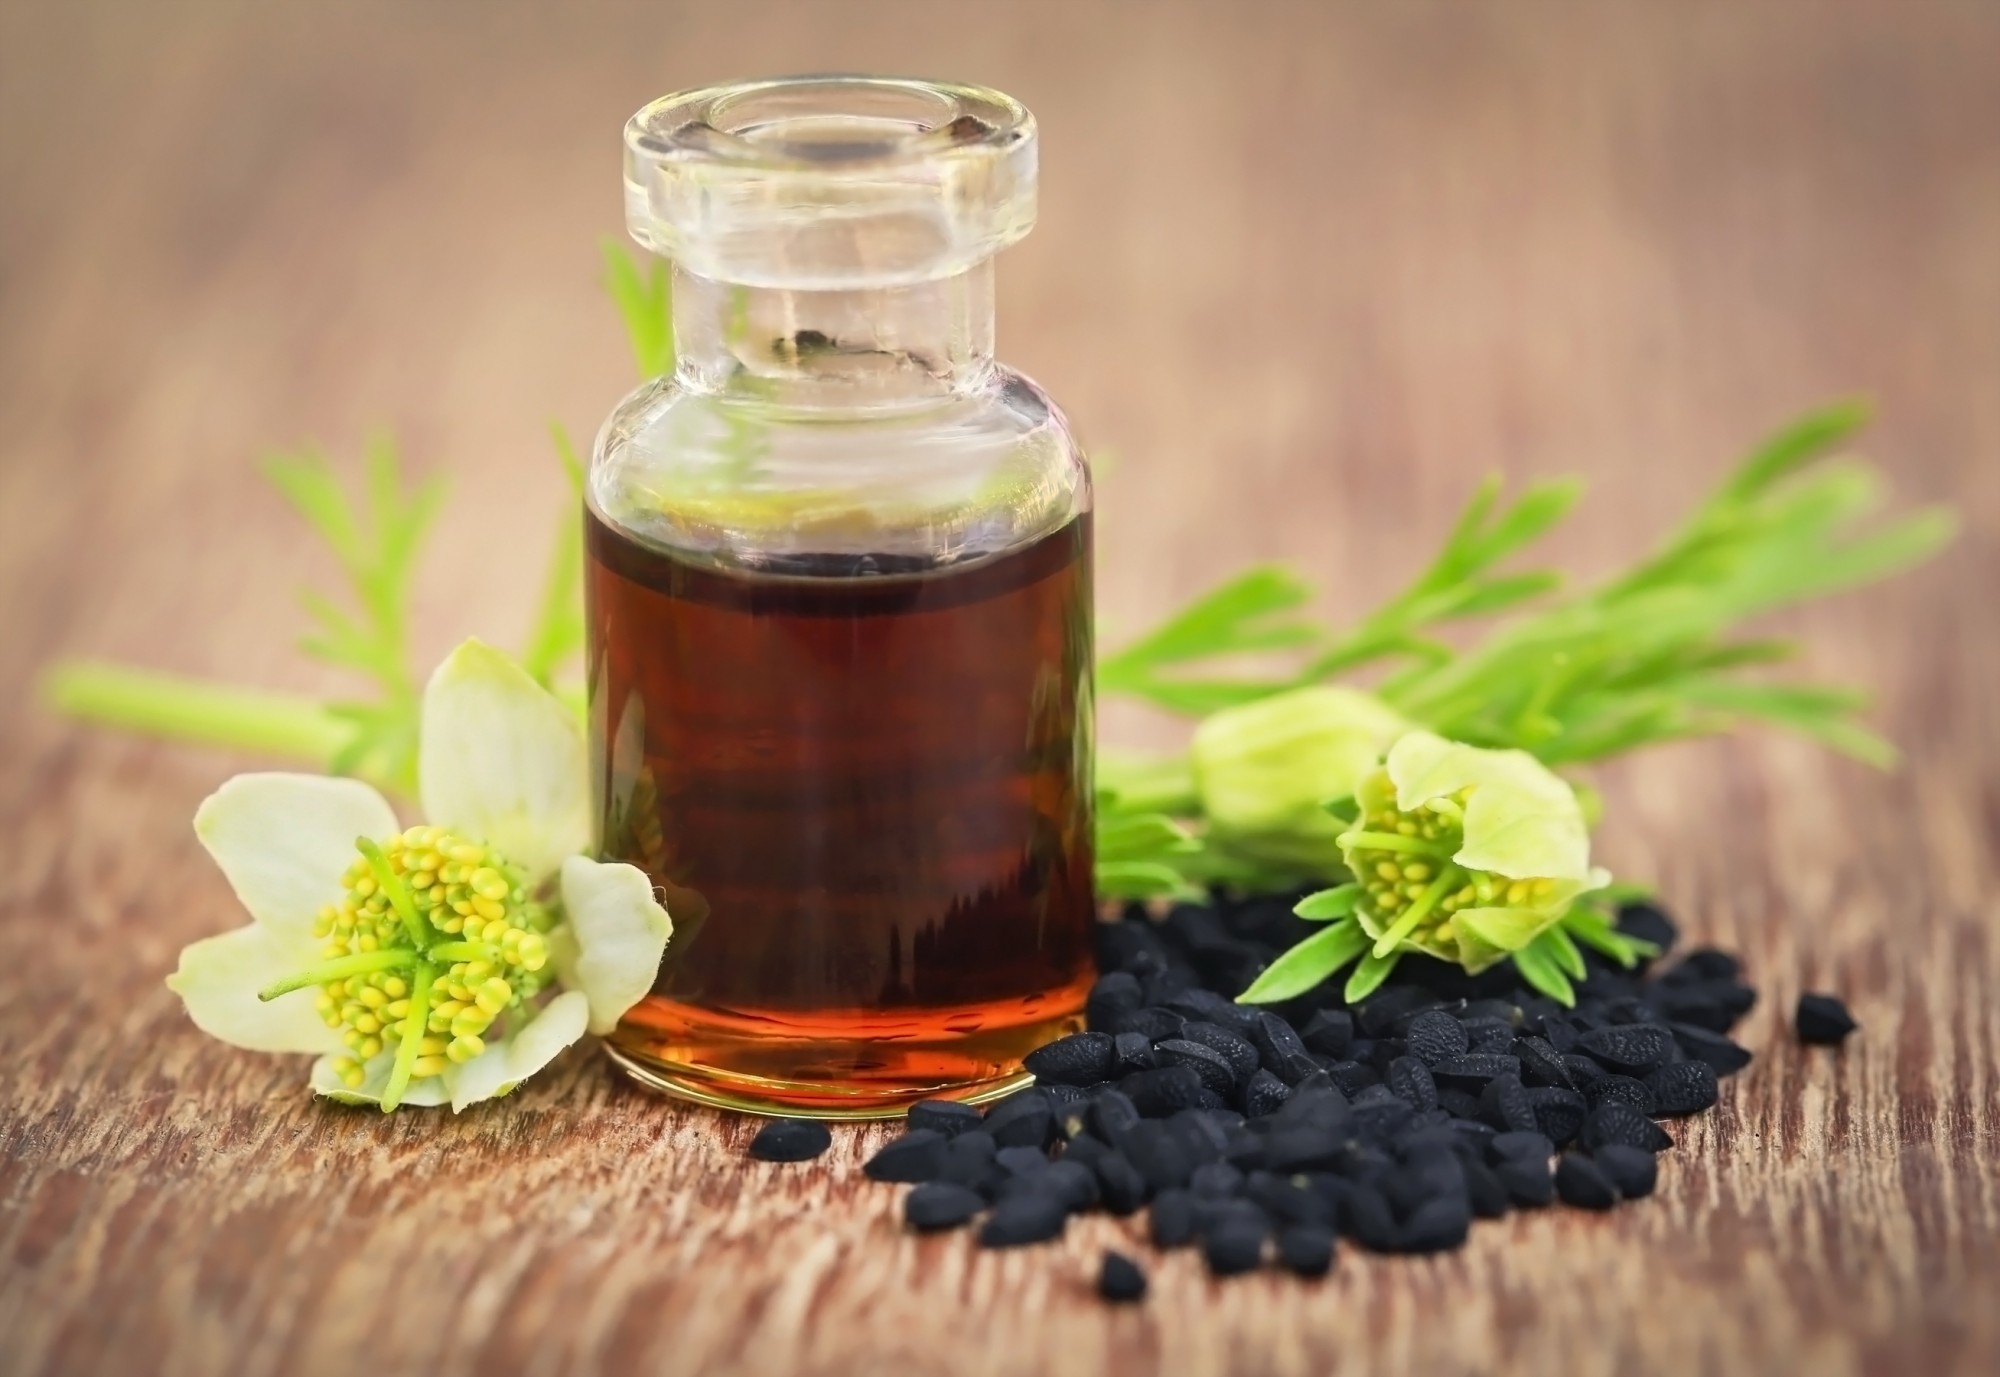 Top 5 Benefits of Black Seed (Nigella Sativa)